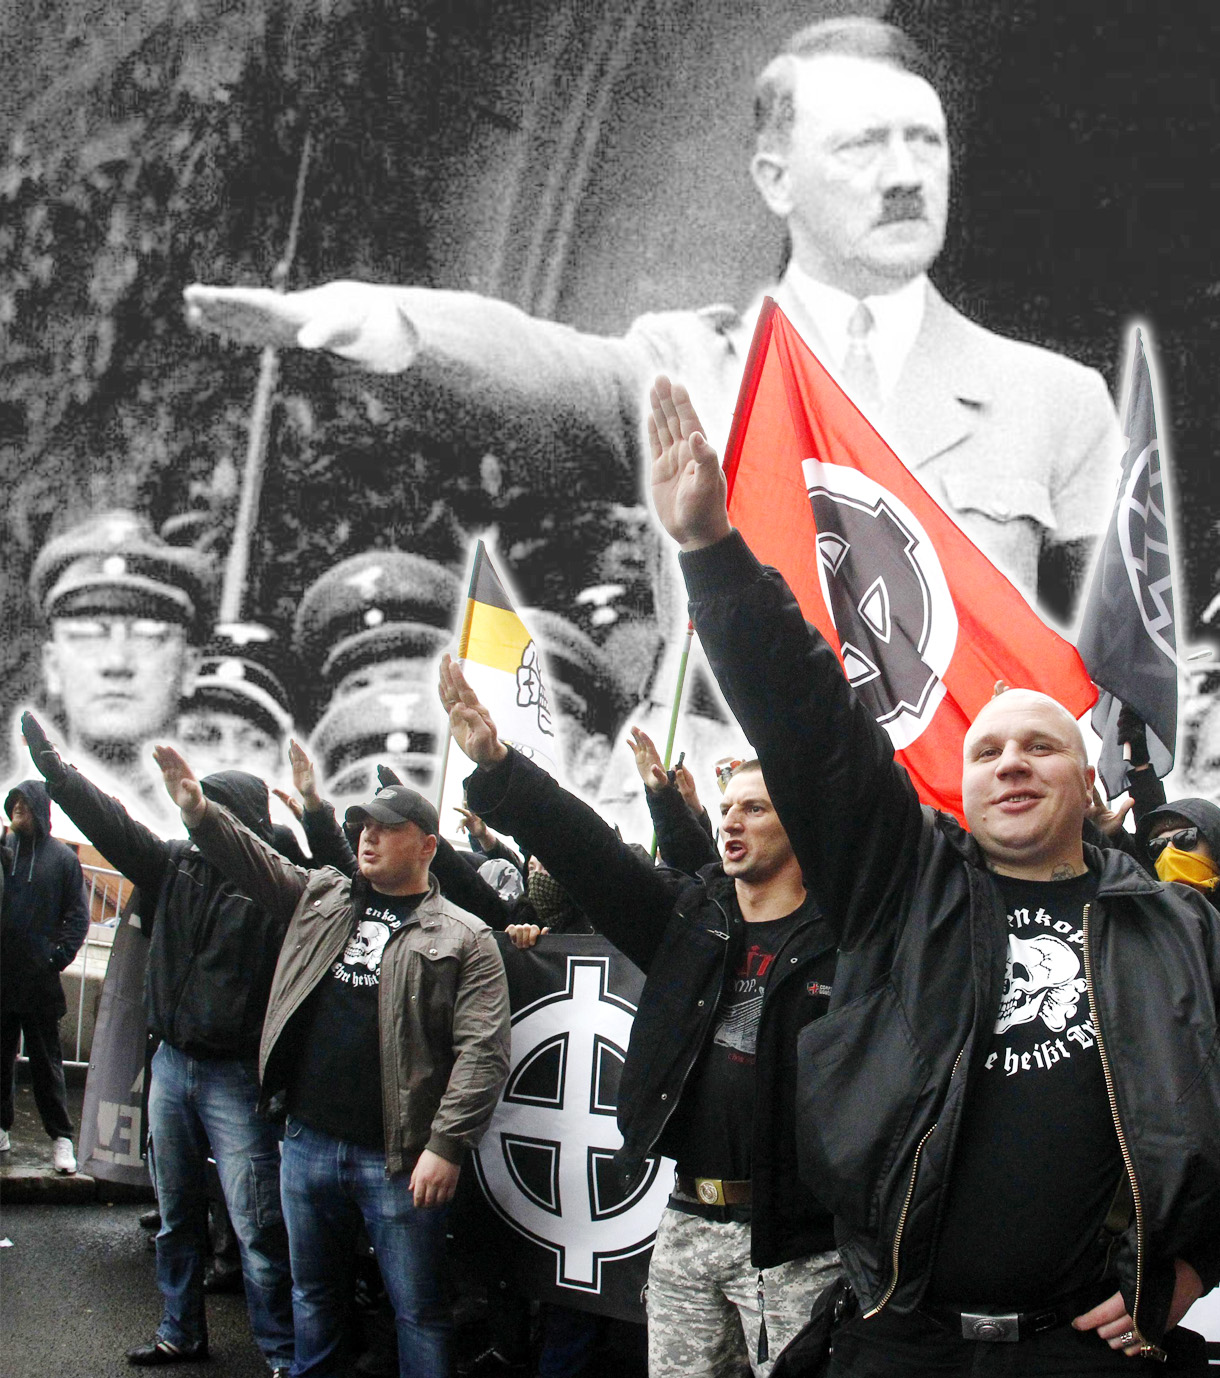 Национал социалистическое общество. Нацизм в Украине нацизм в Украине. Современные нацисты. Современный нацизм. Современные фашисты.